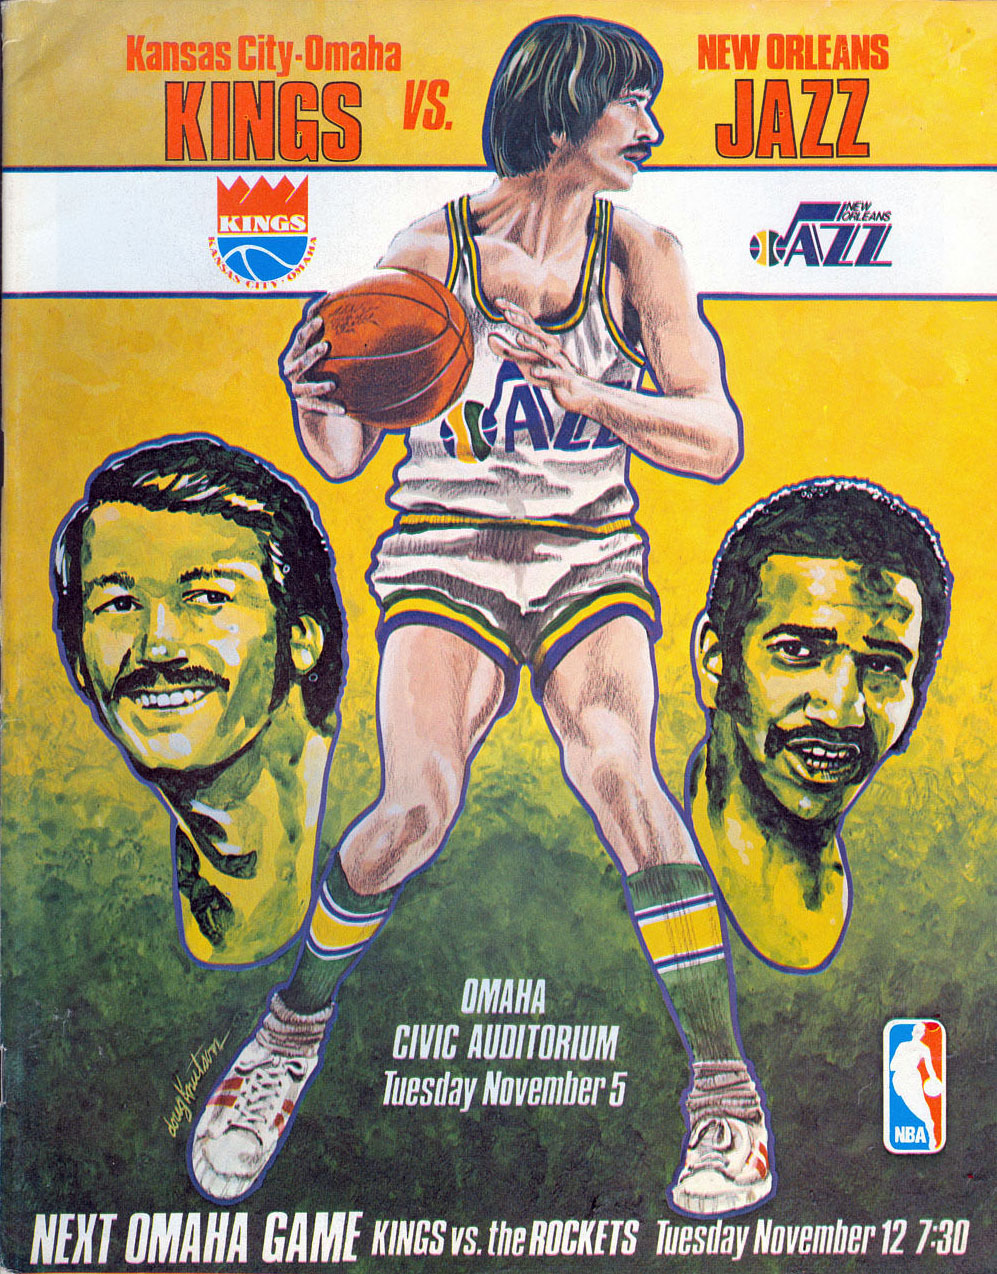 NBA Program: Kansas City-Omaha Kings (1974-75)